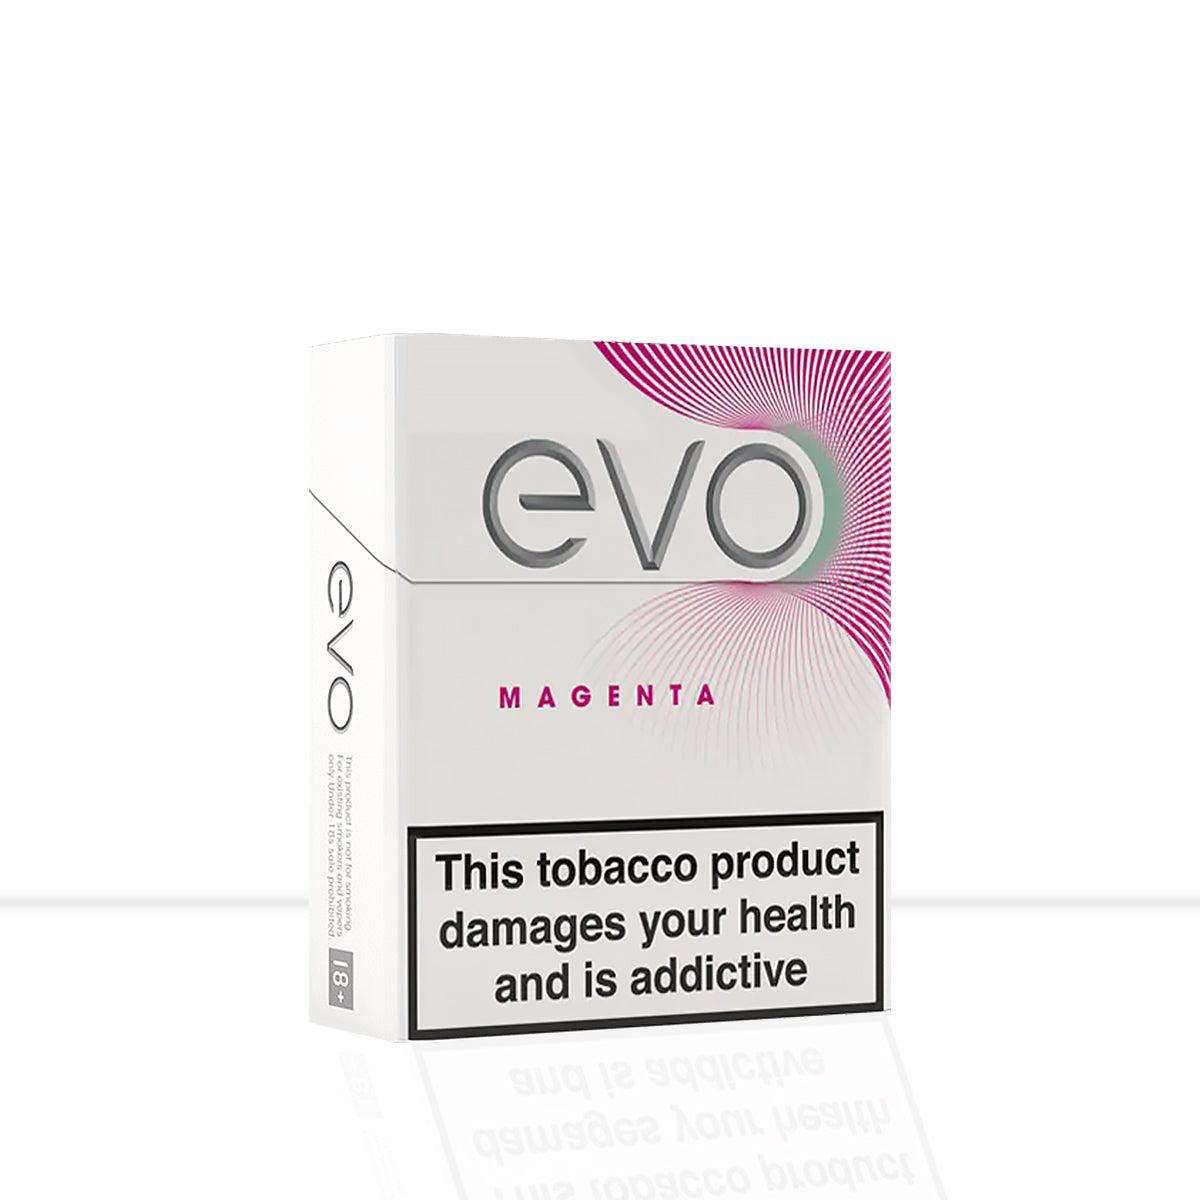 A pack of twenty Evo tobacco sticks